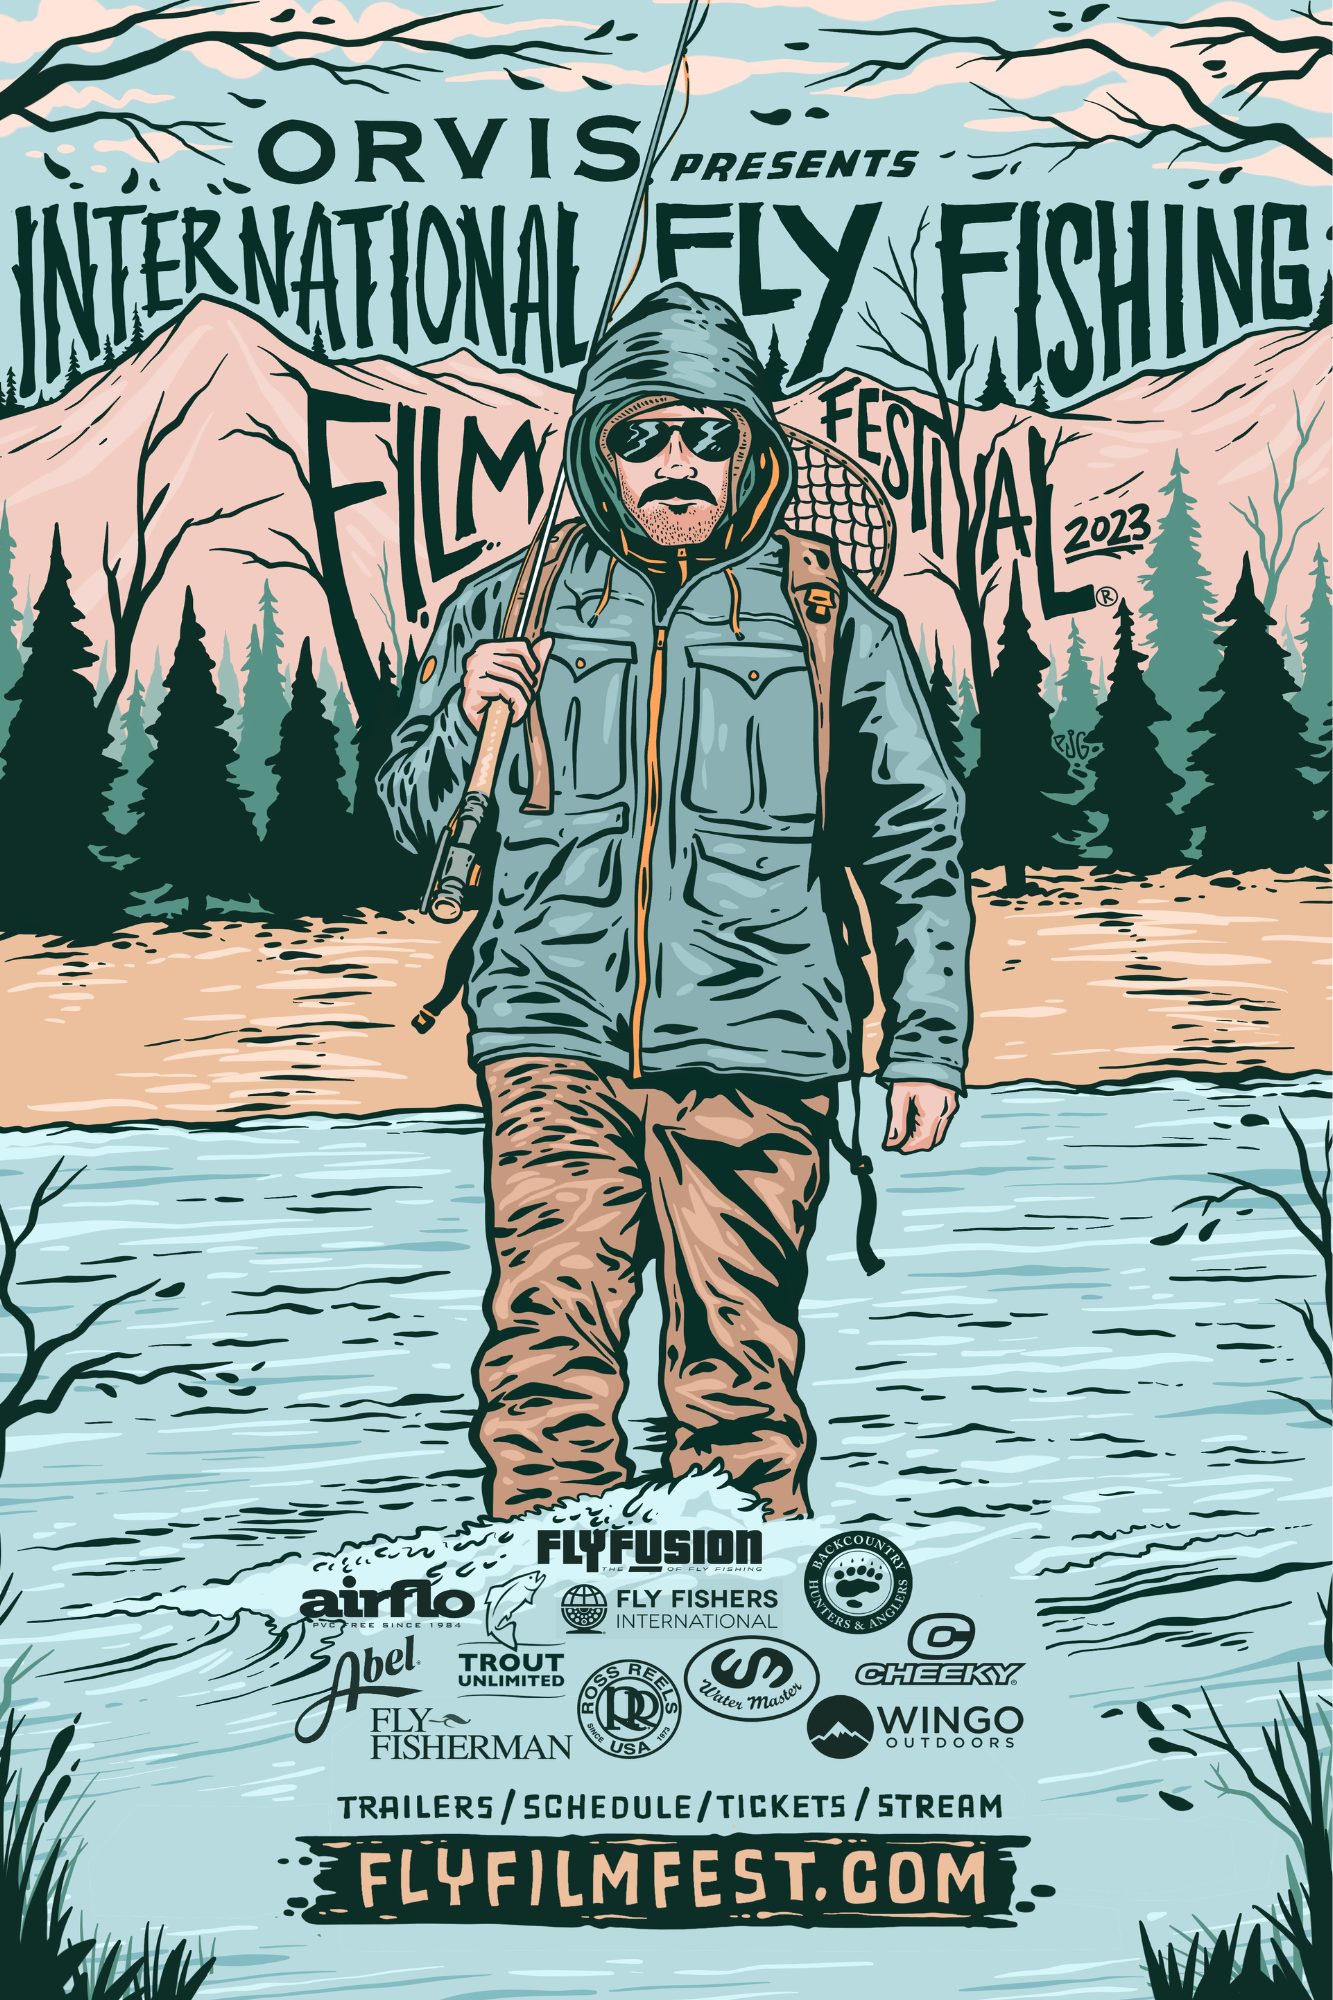 International Fly Fishing Film Festival at The Roxy Theater on Missoula's Hip Strip on Thursday, April 13, 2023